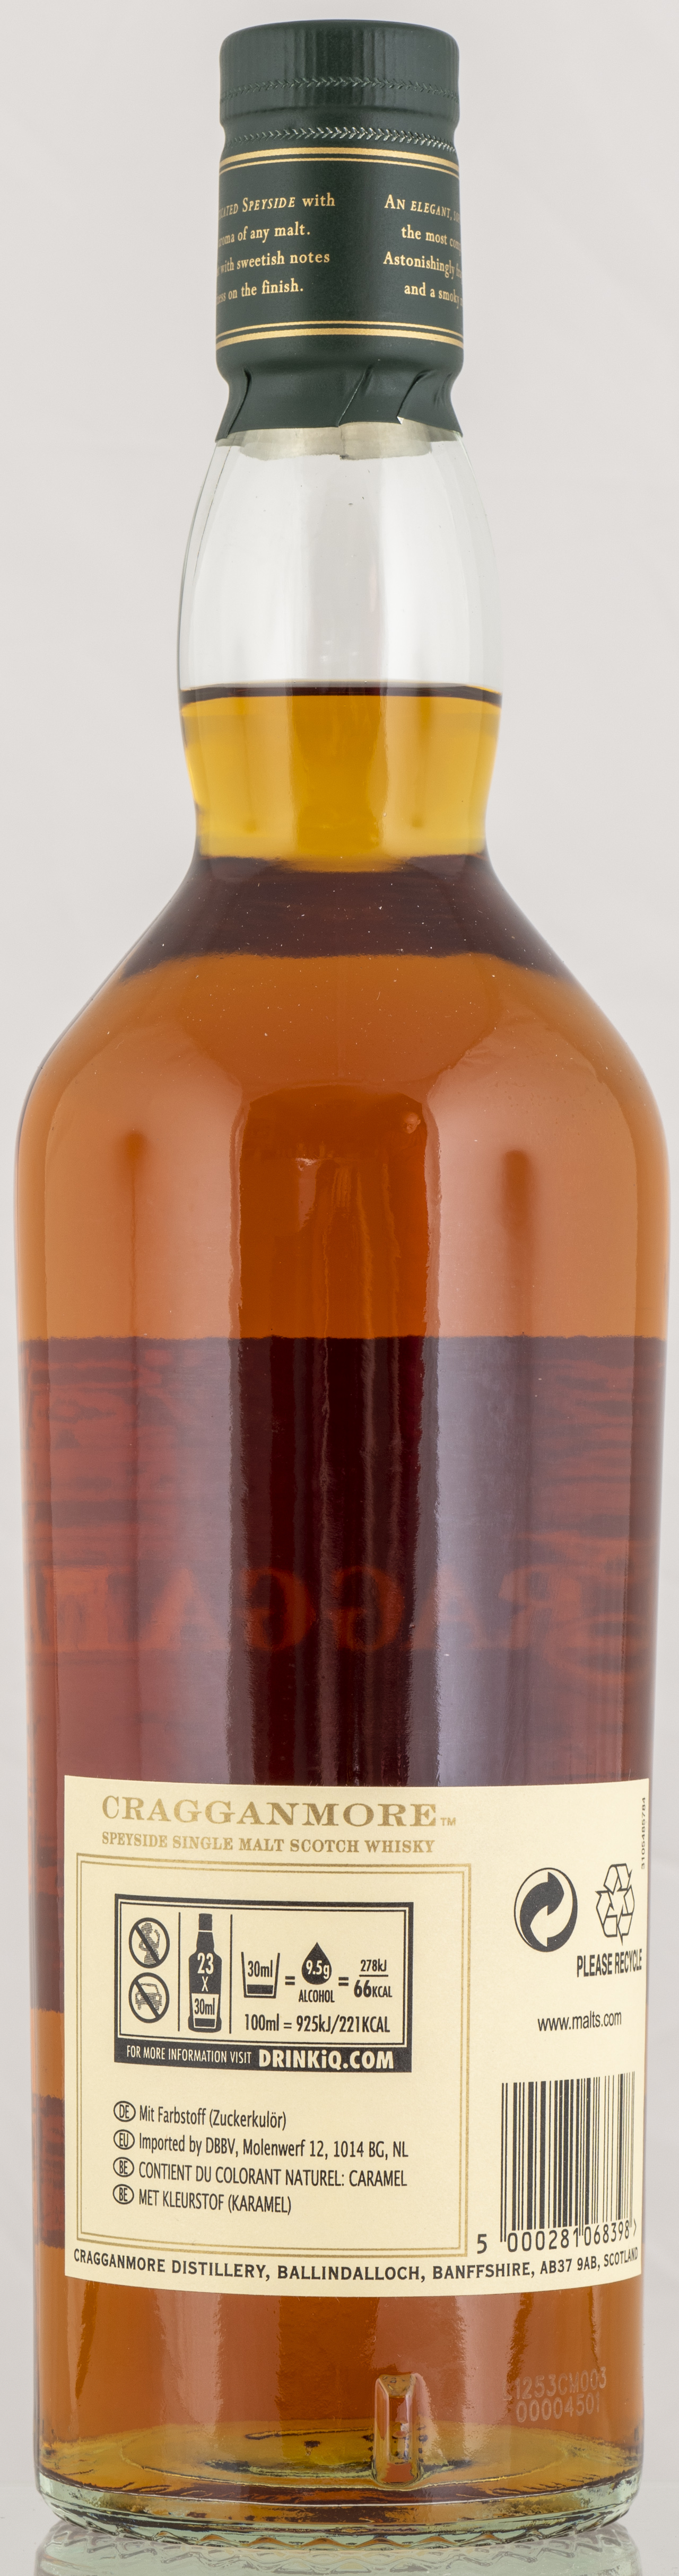 Billede: PHC_7311 - Cragganmore Distillers Edition 2009-2021 CggD-6573 - bottle back.jpg